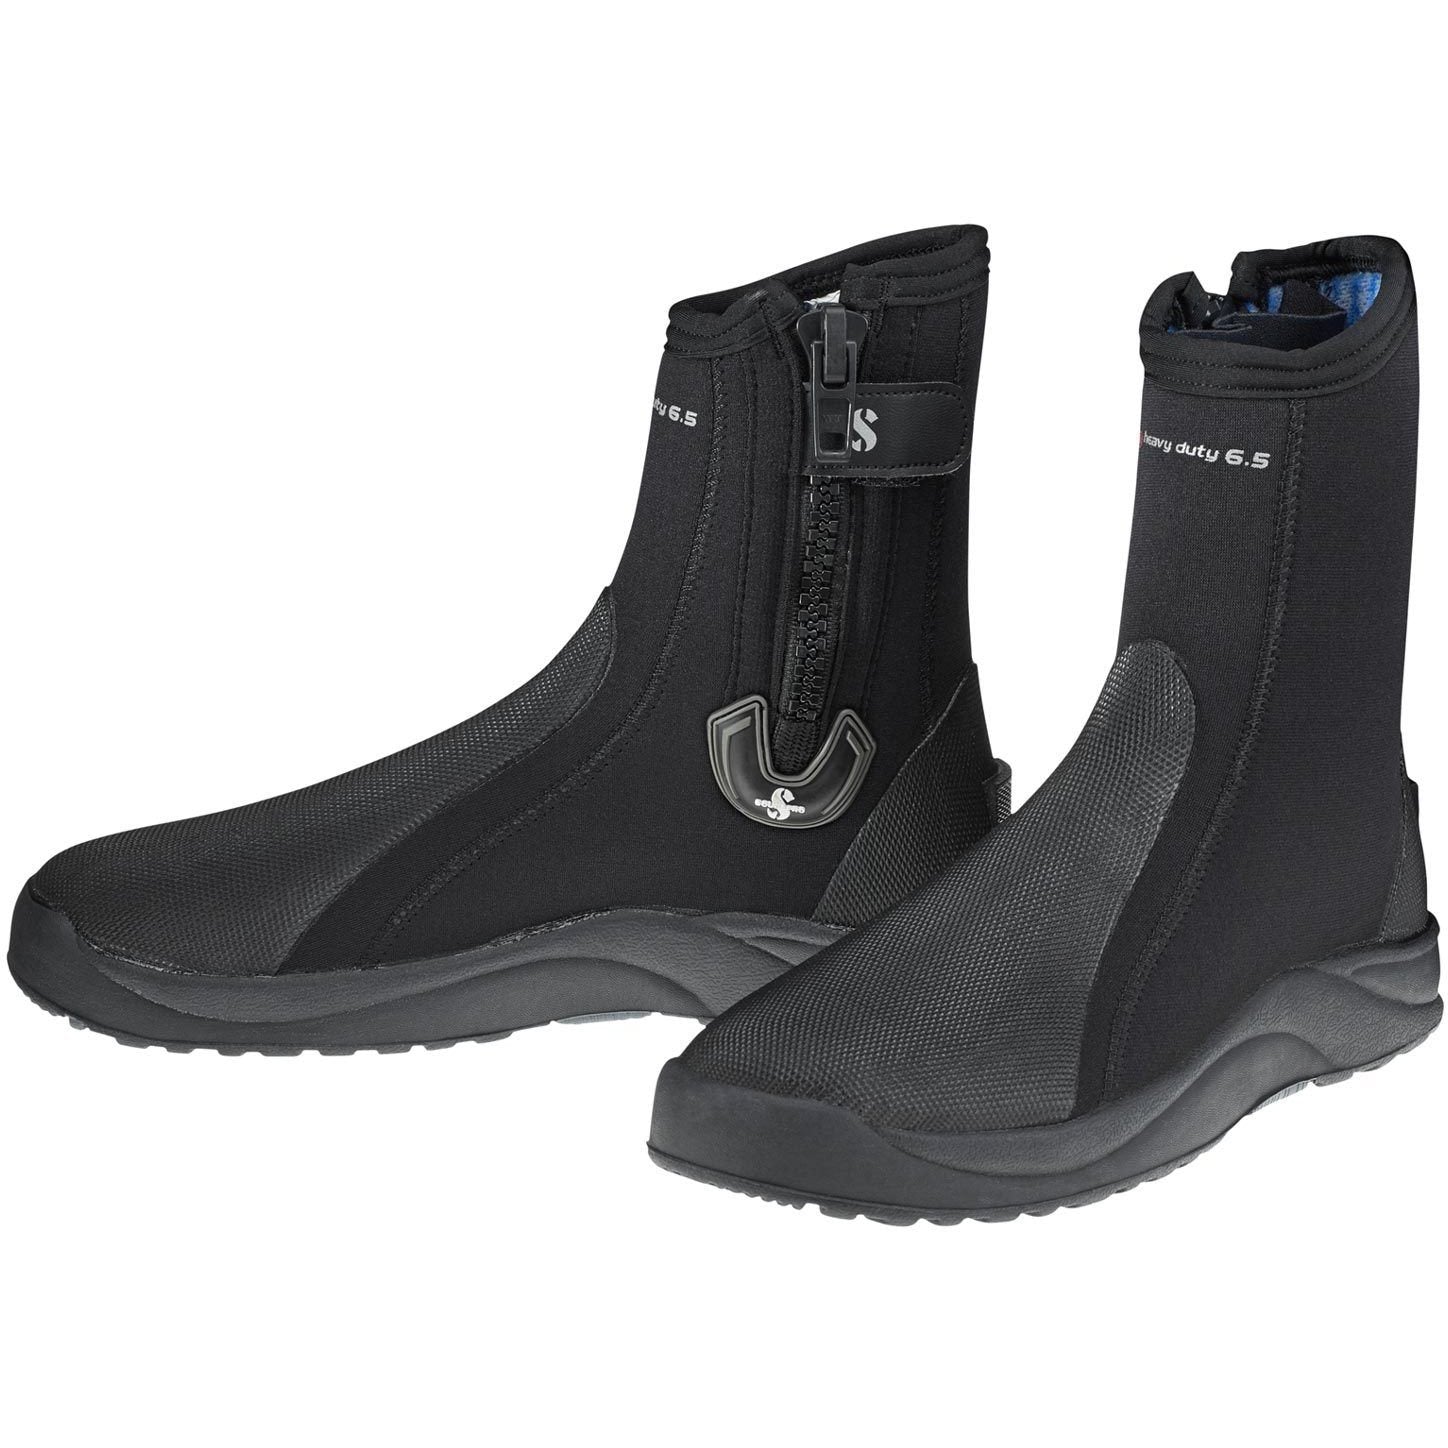 Heavy-Duty 6.5mm Boots Boots & Socks Scubapro 